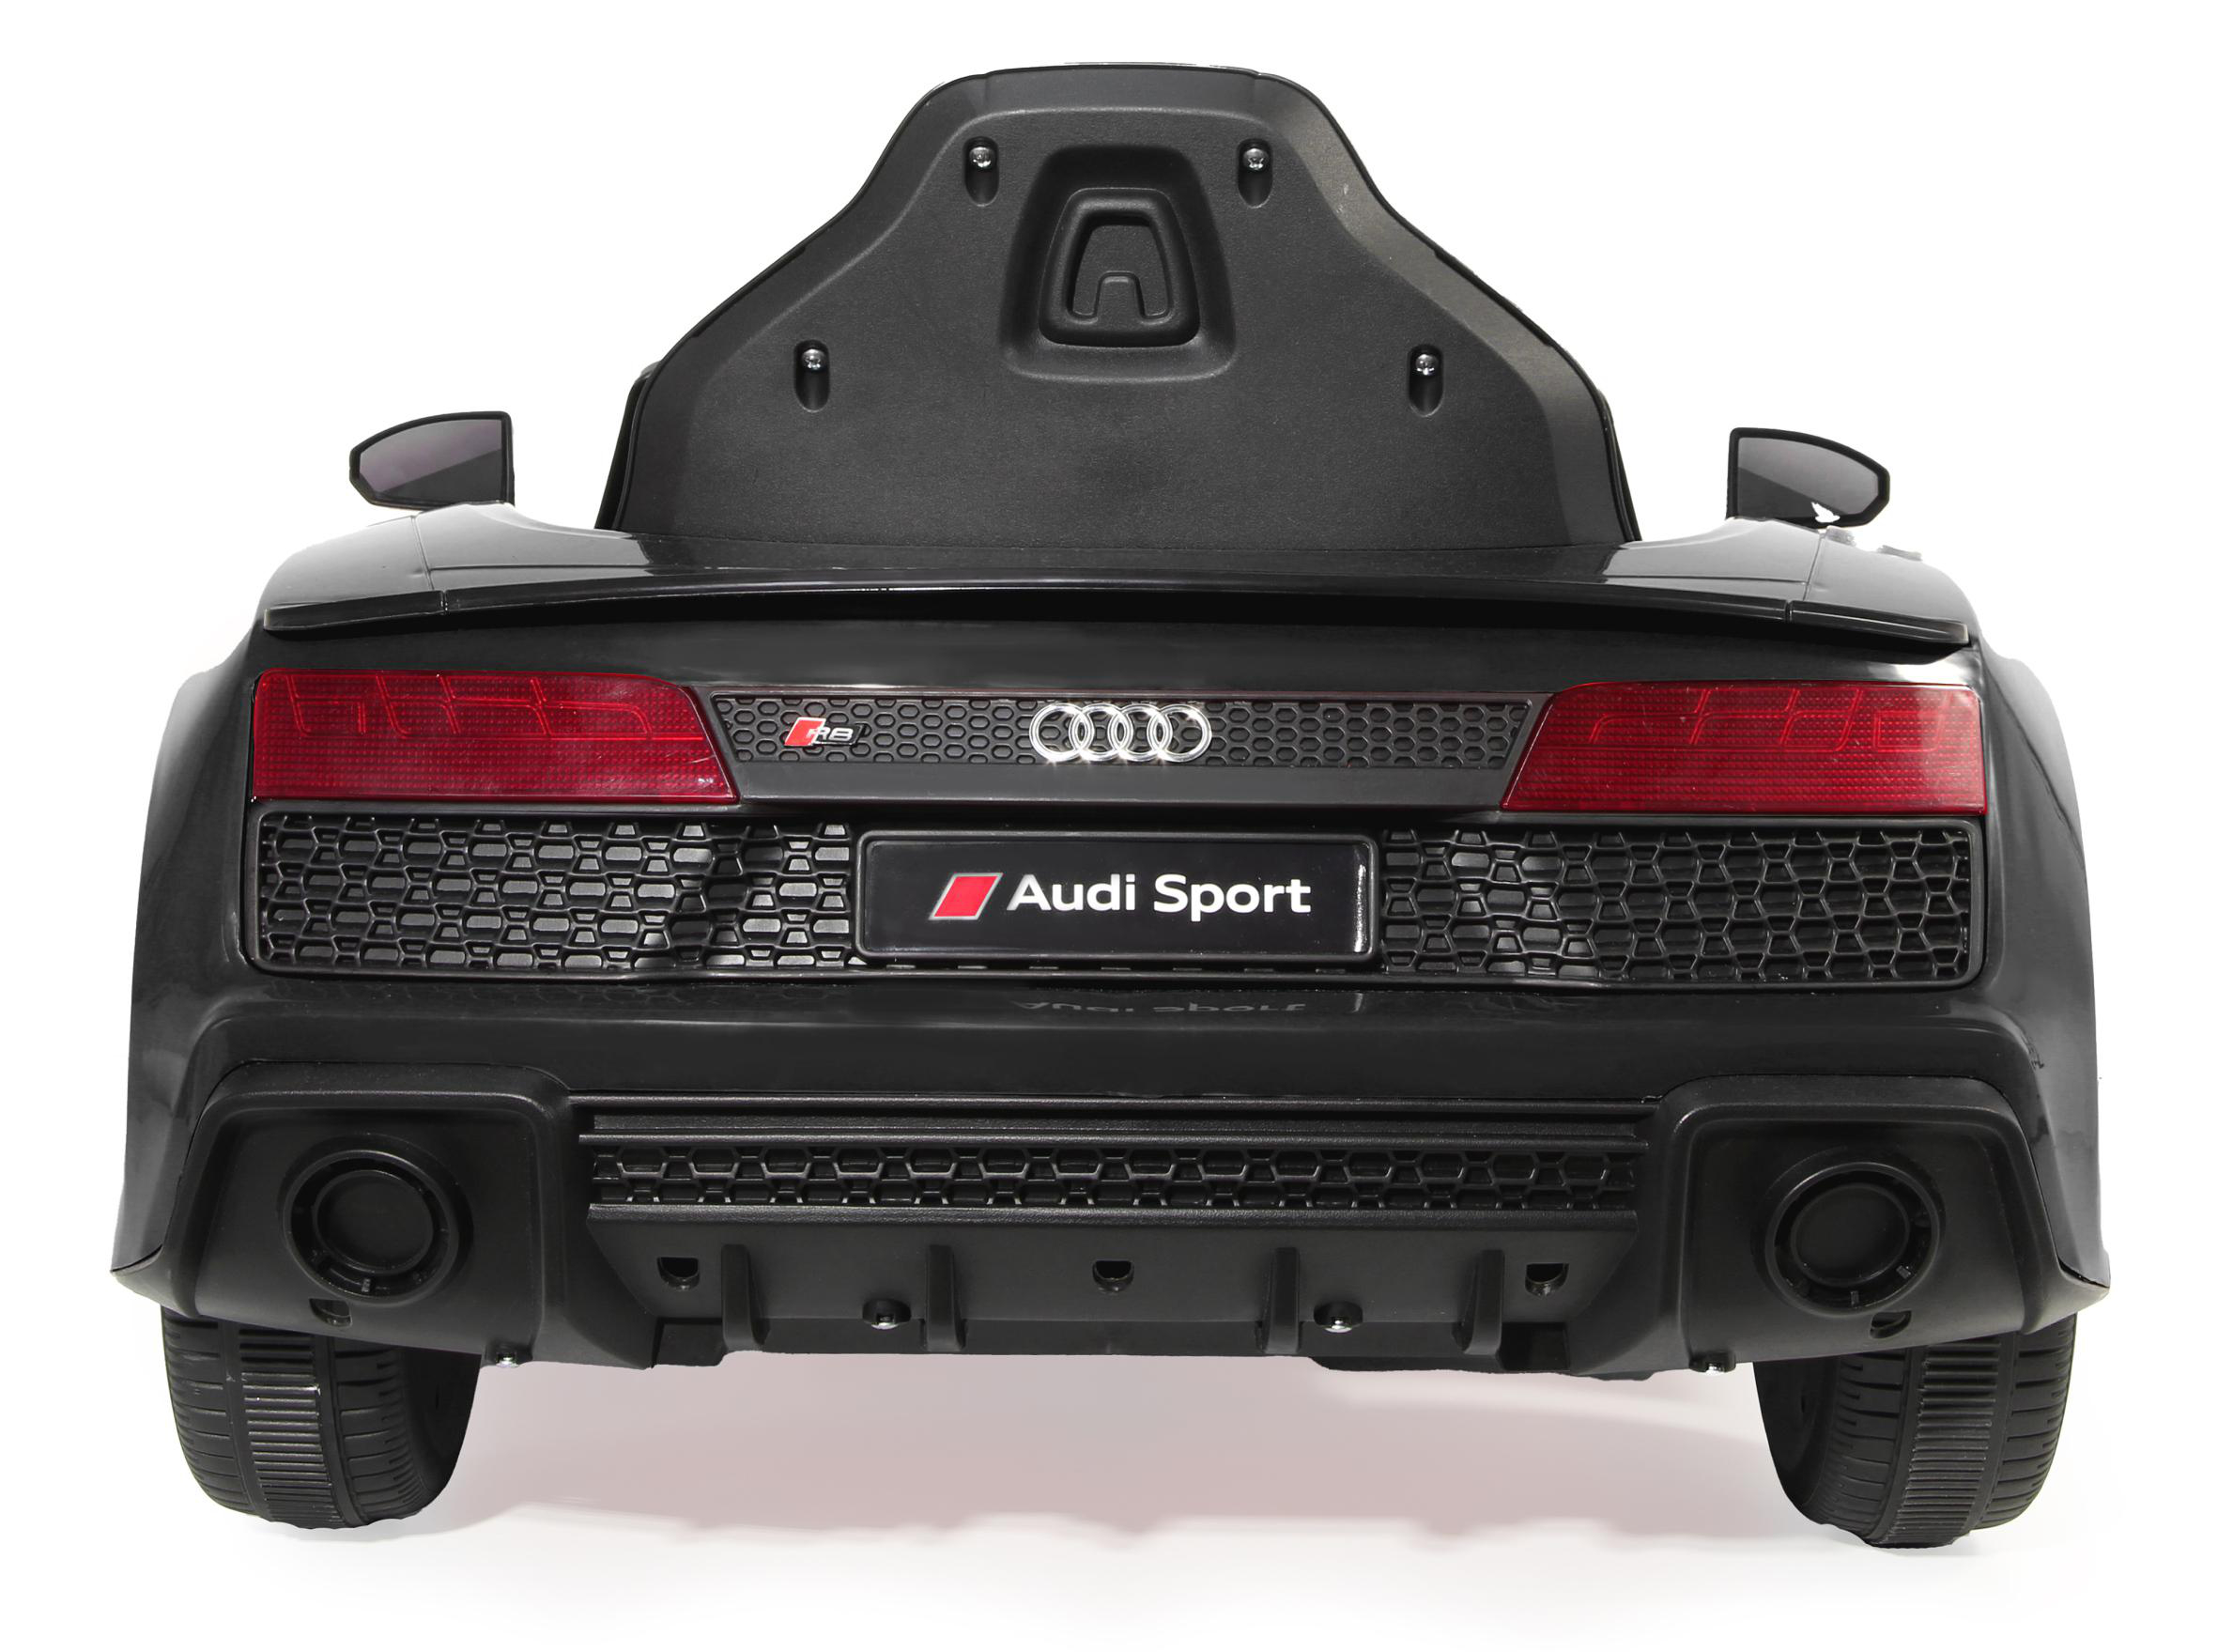 Set Einhell 18V inkl. Schwarz R8 KIDS schwarz Elektrofahrzeug Audi Power Spyder Ride-on JAMARA Starter X-Change